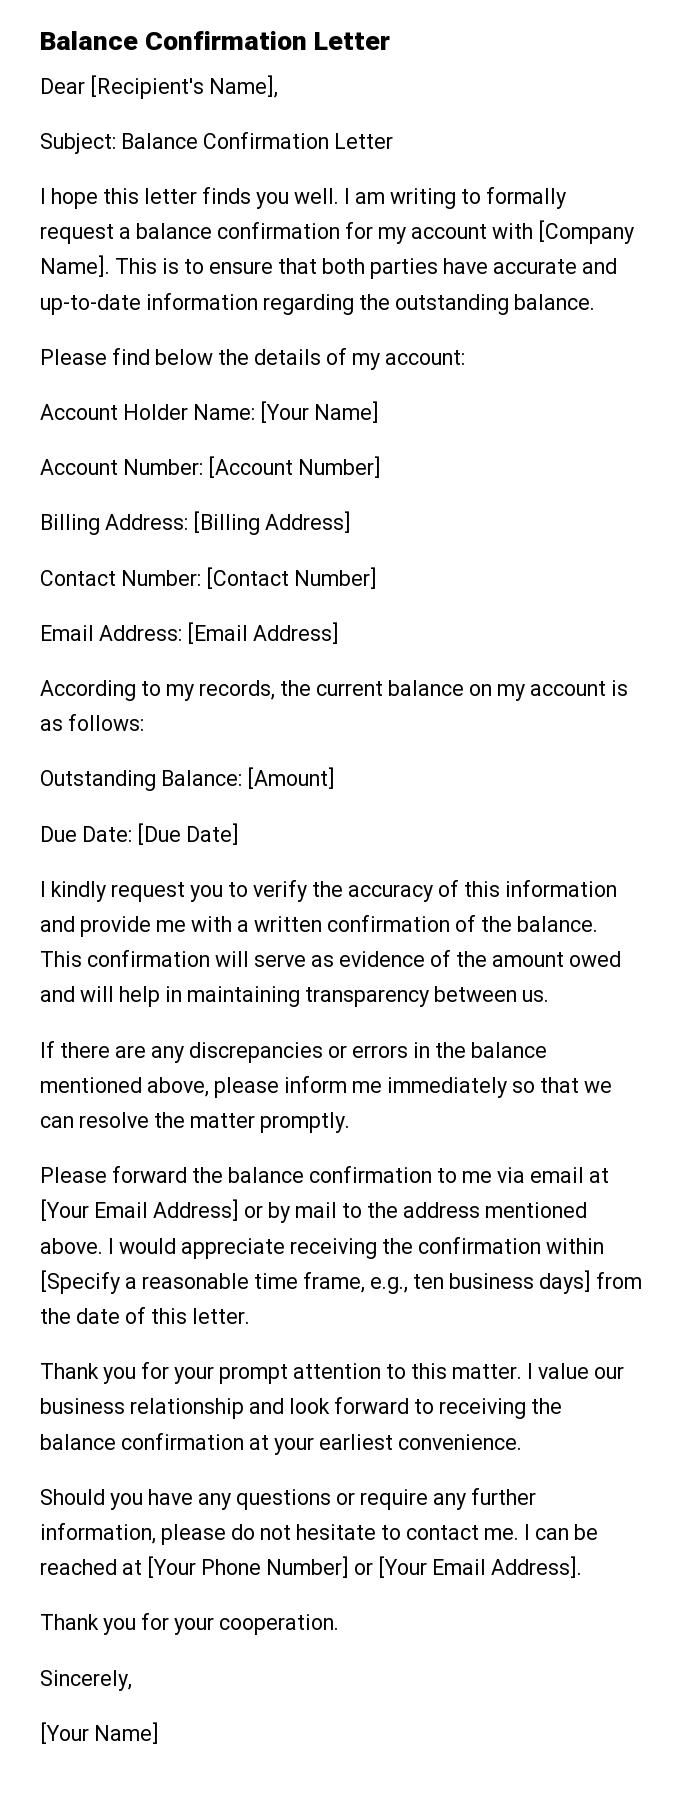 Balance Confirmation Letter